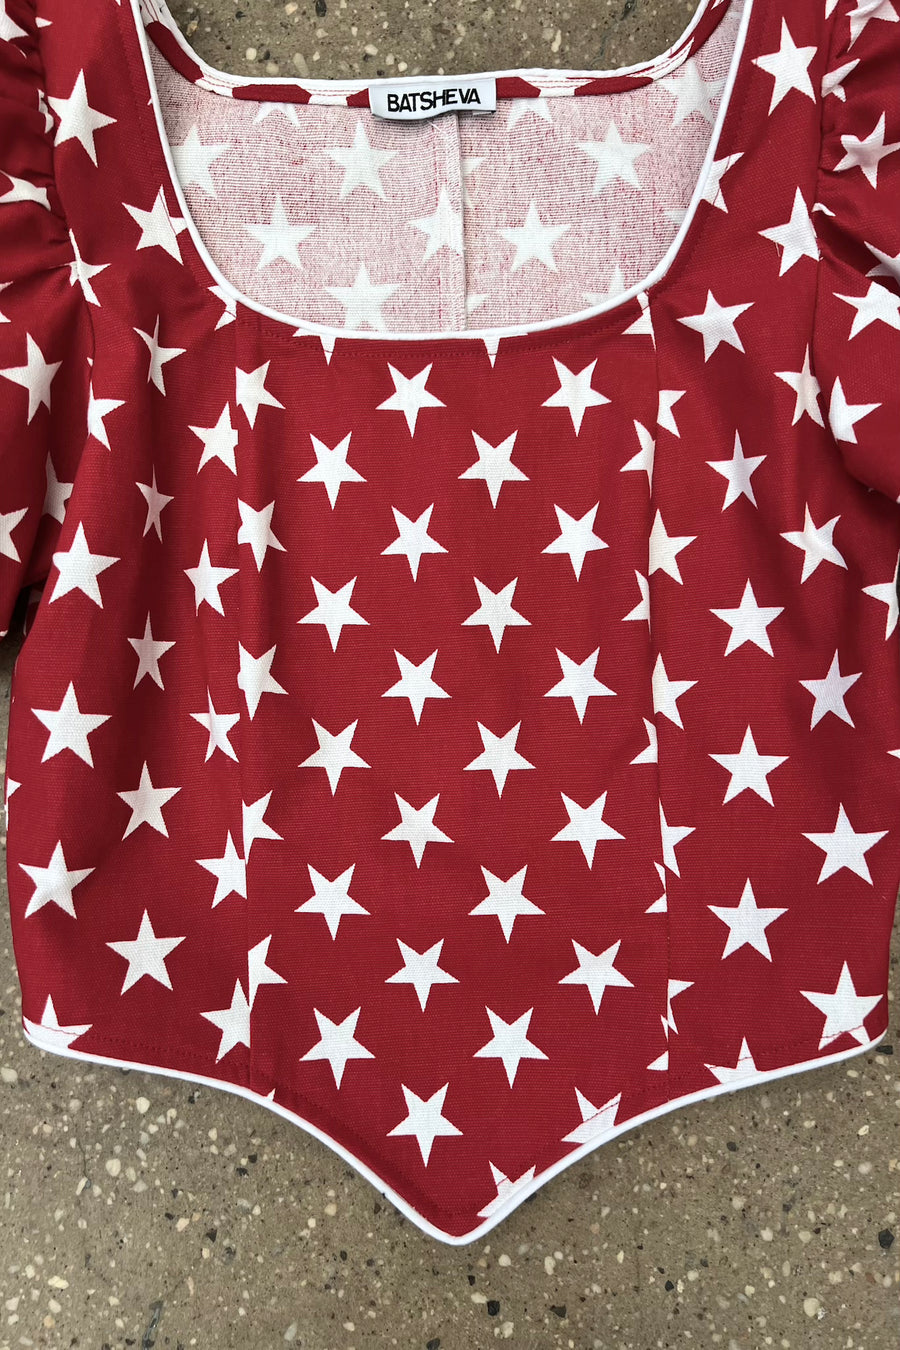 BATSHEVA - Short Sleeve Dirndl Top in Red and White Stars